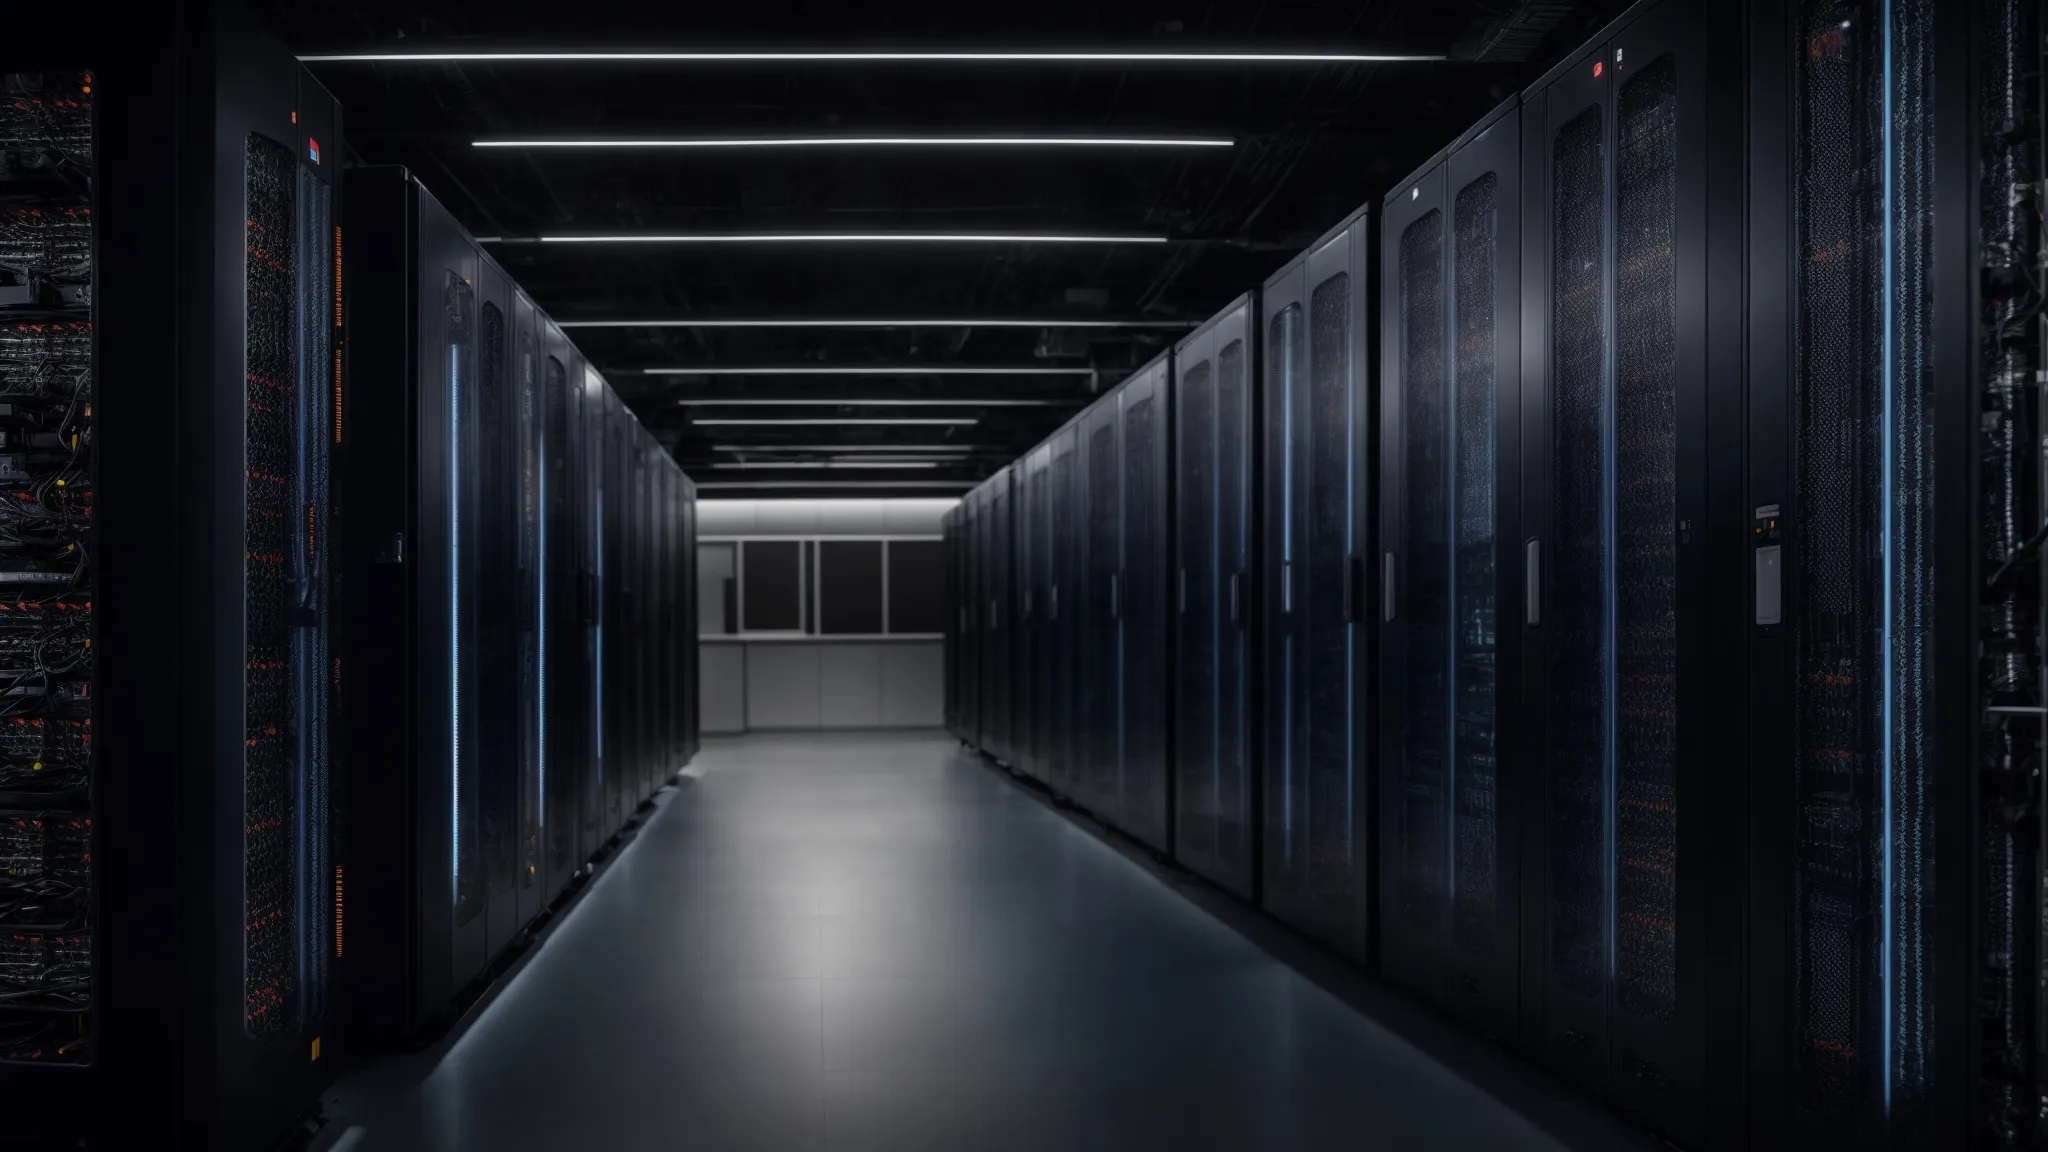 a server room with rows of modern, sleek server racks indicating advanced technology that enhances performance.